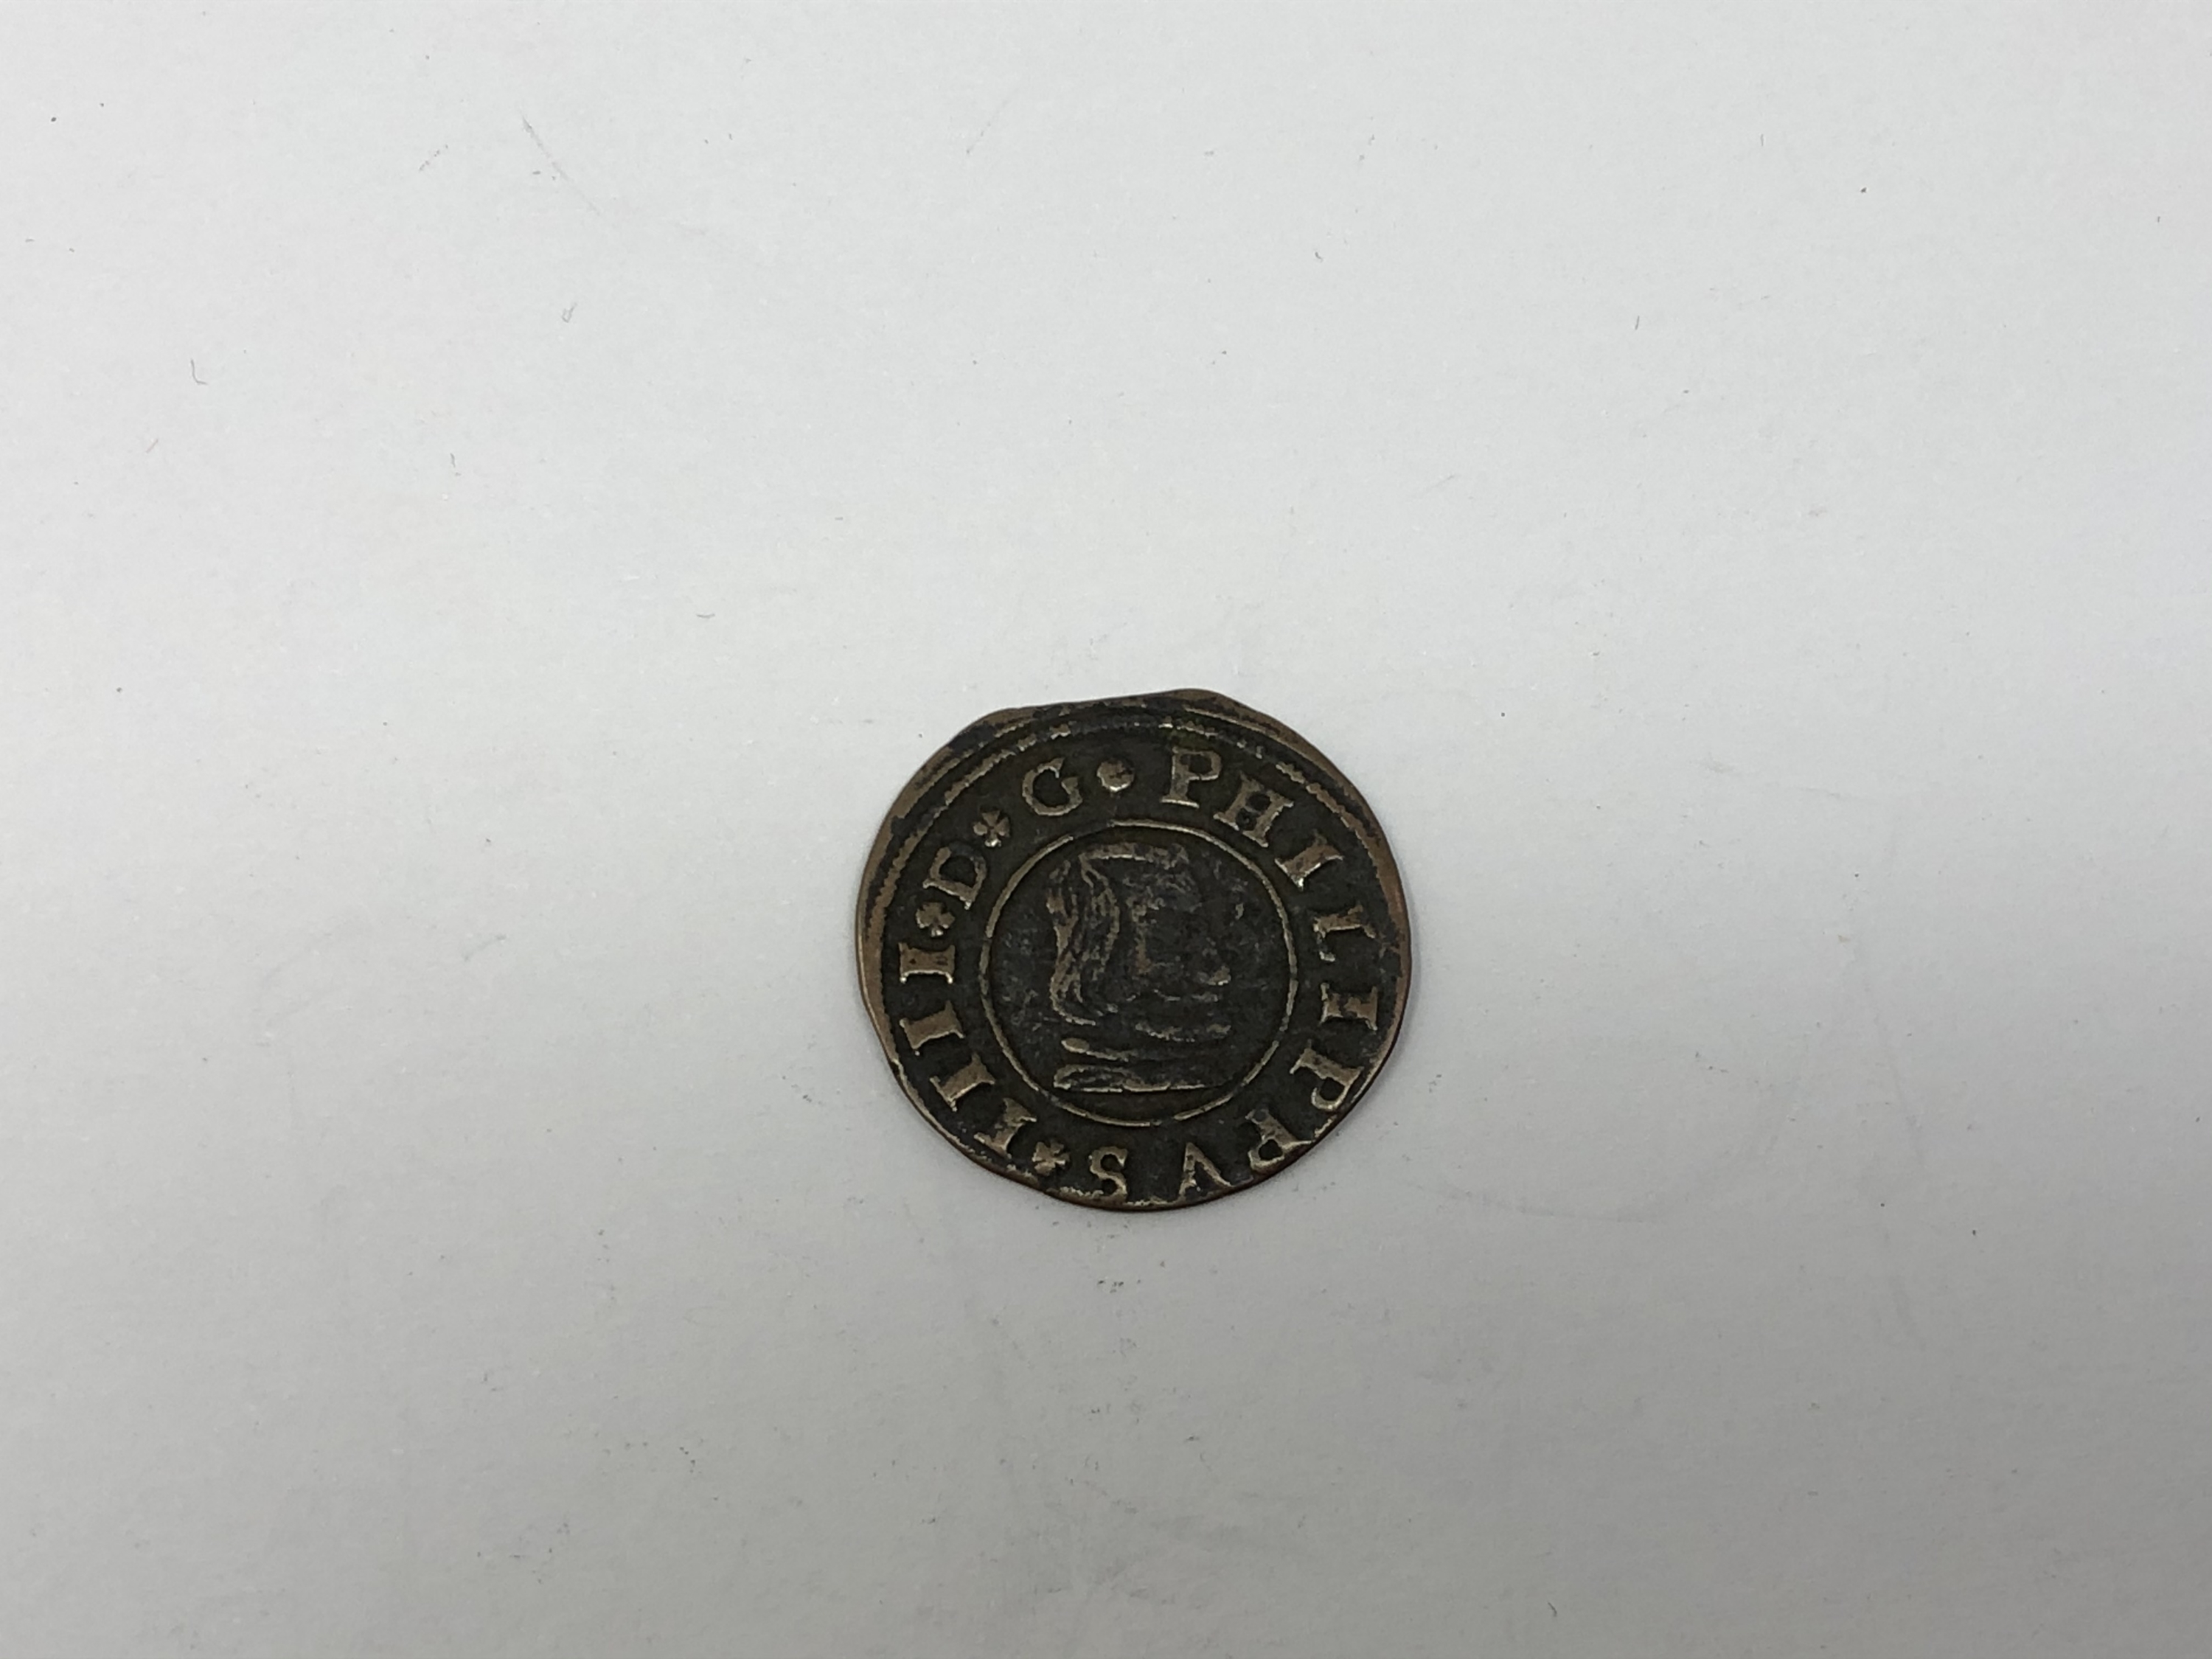 A 1663 Spanish coin